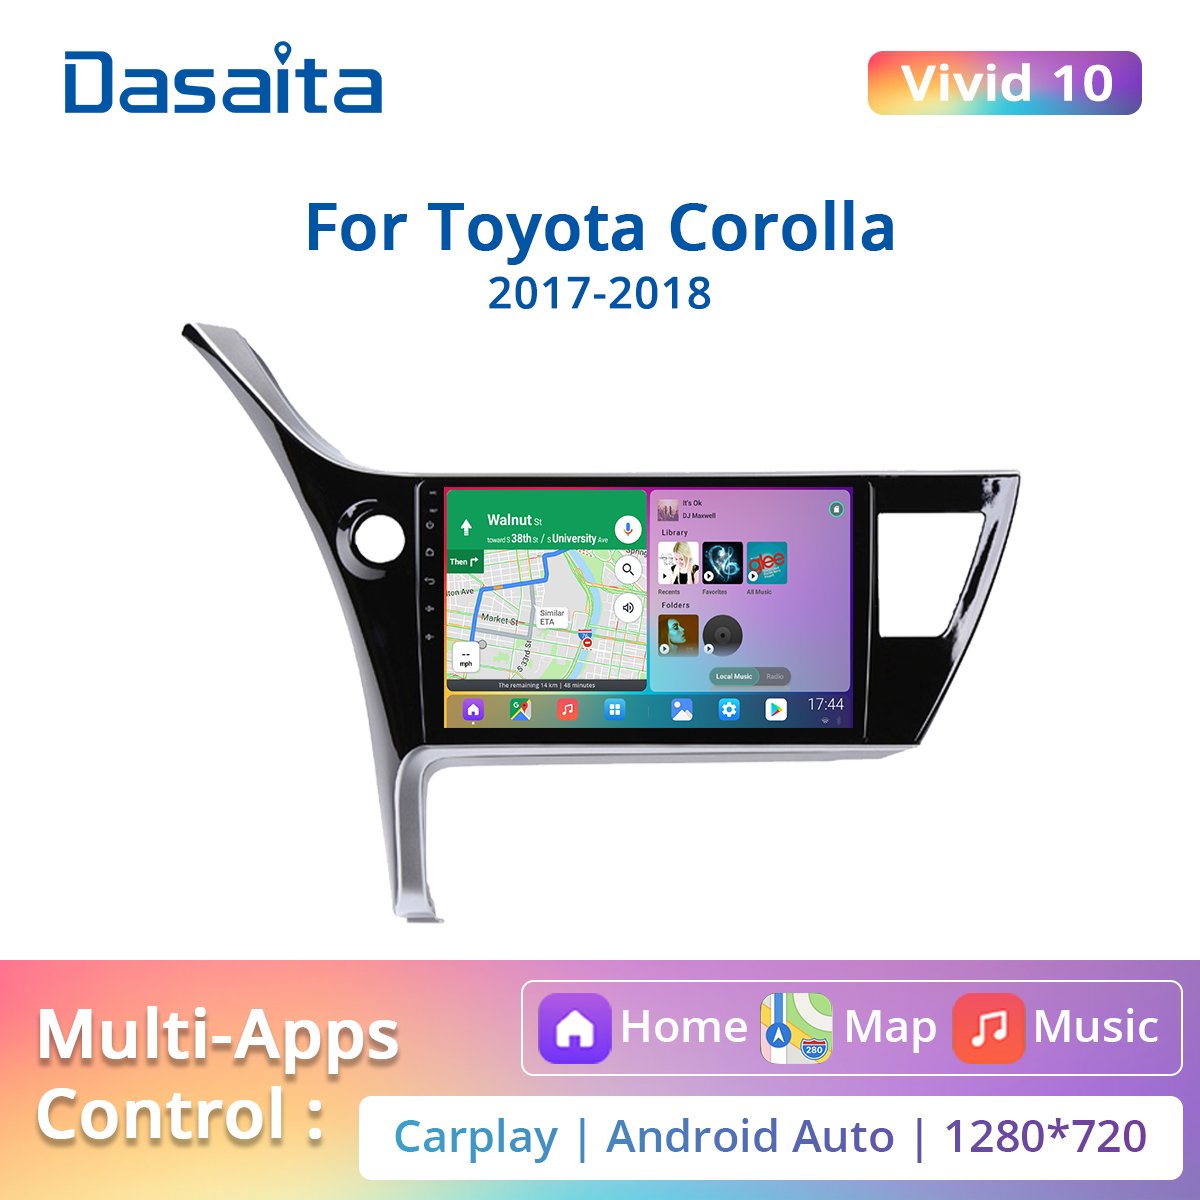 Dasaita Vivid For Toyota Corolla 2017 2018 Car Stereo Android Auto Carplay Multimedia Video Player Navigation GPS 1280*720 BT5.0